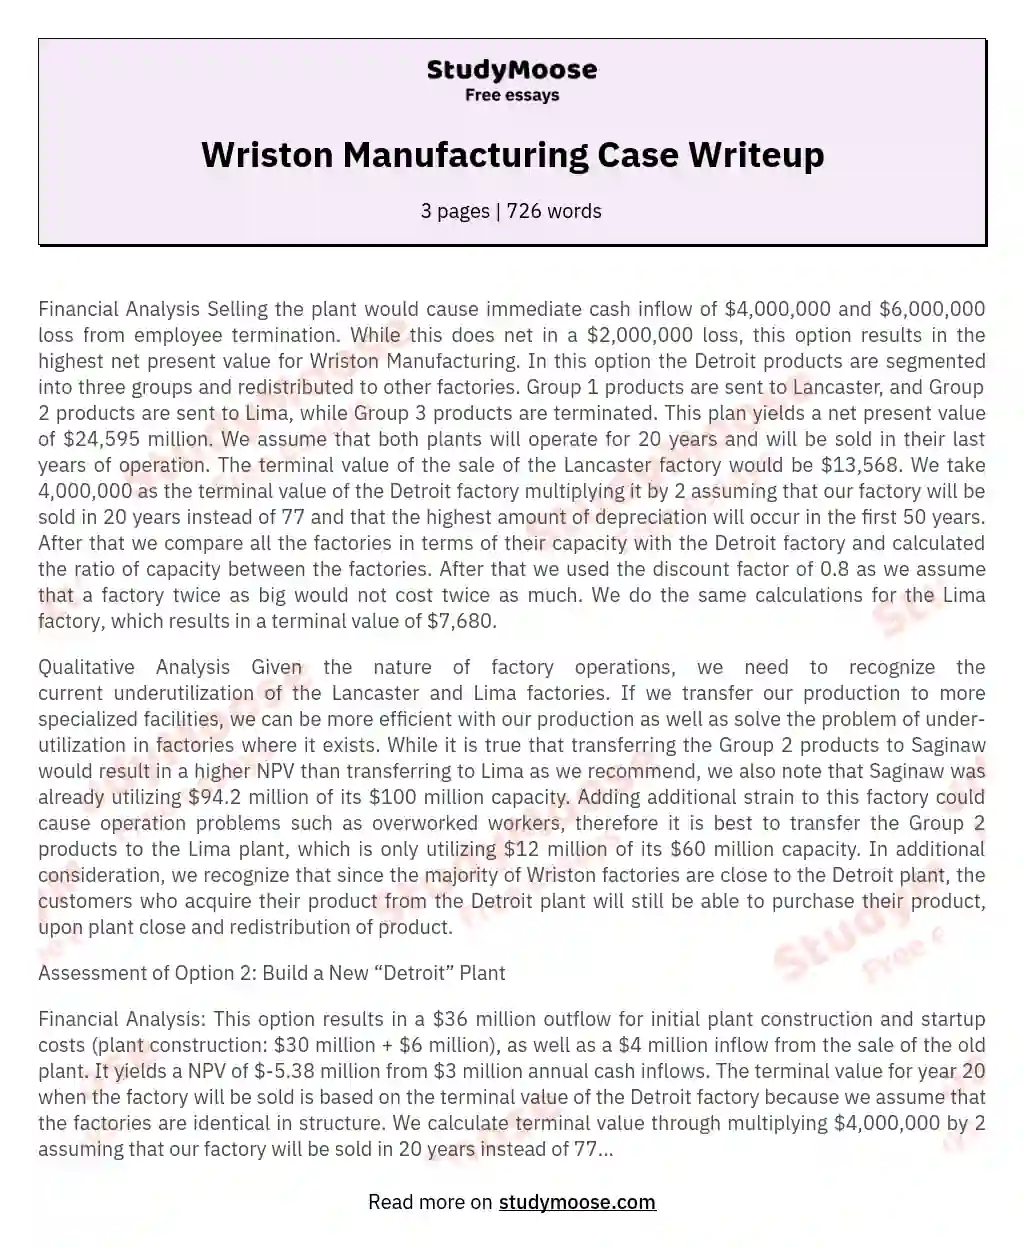 Wriston Manufacturing Case Writeup essay